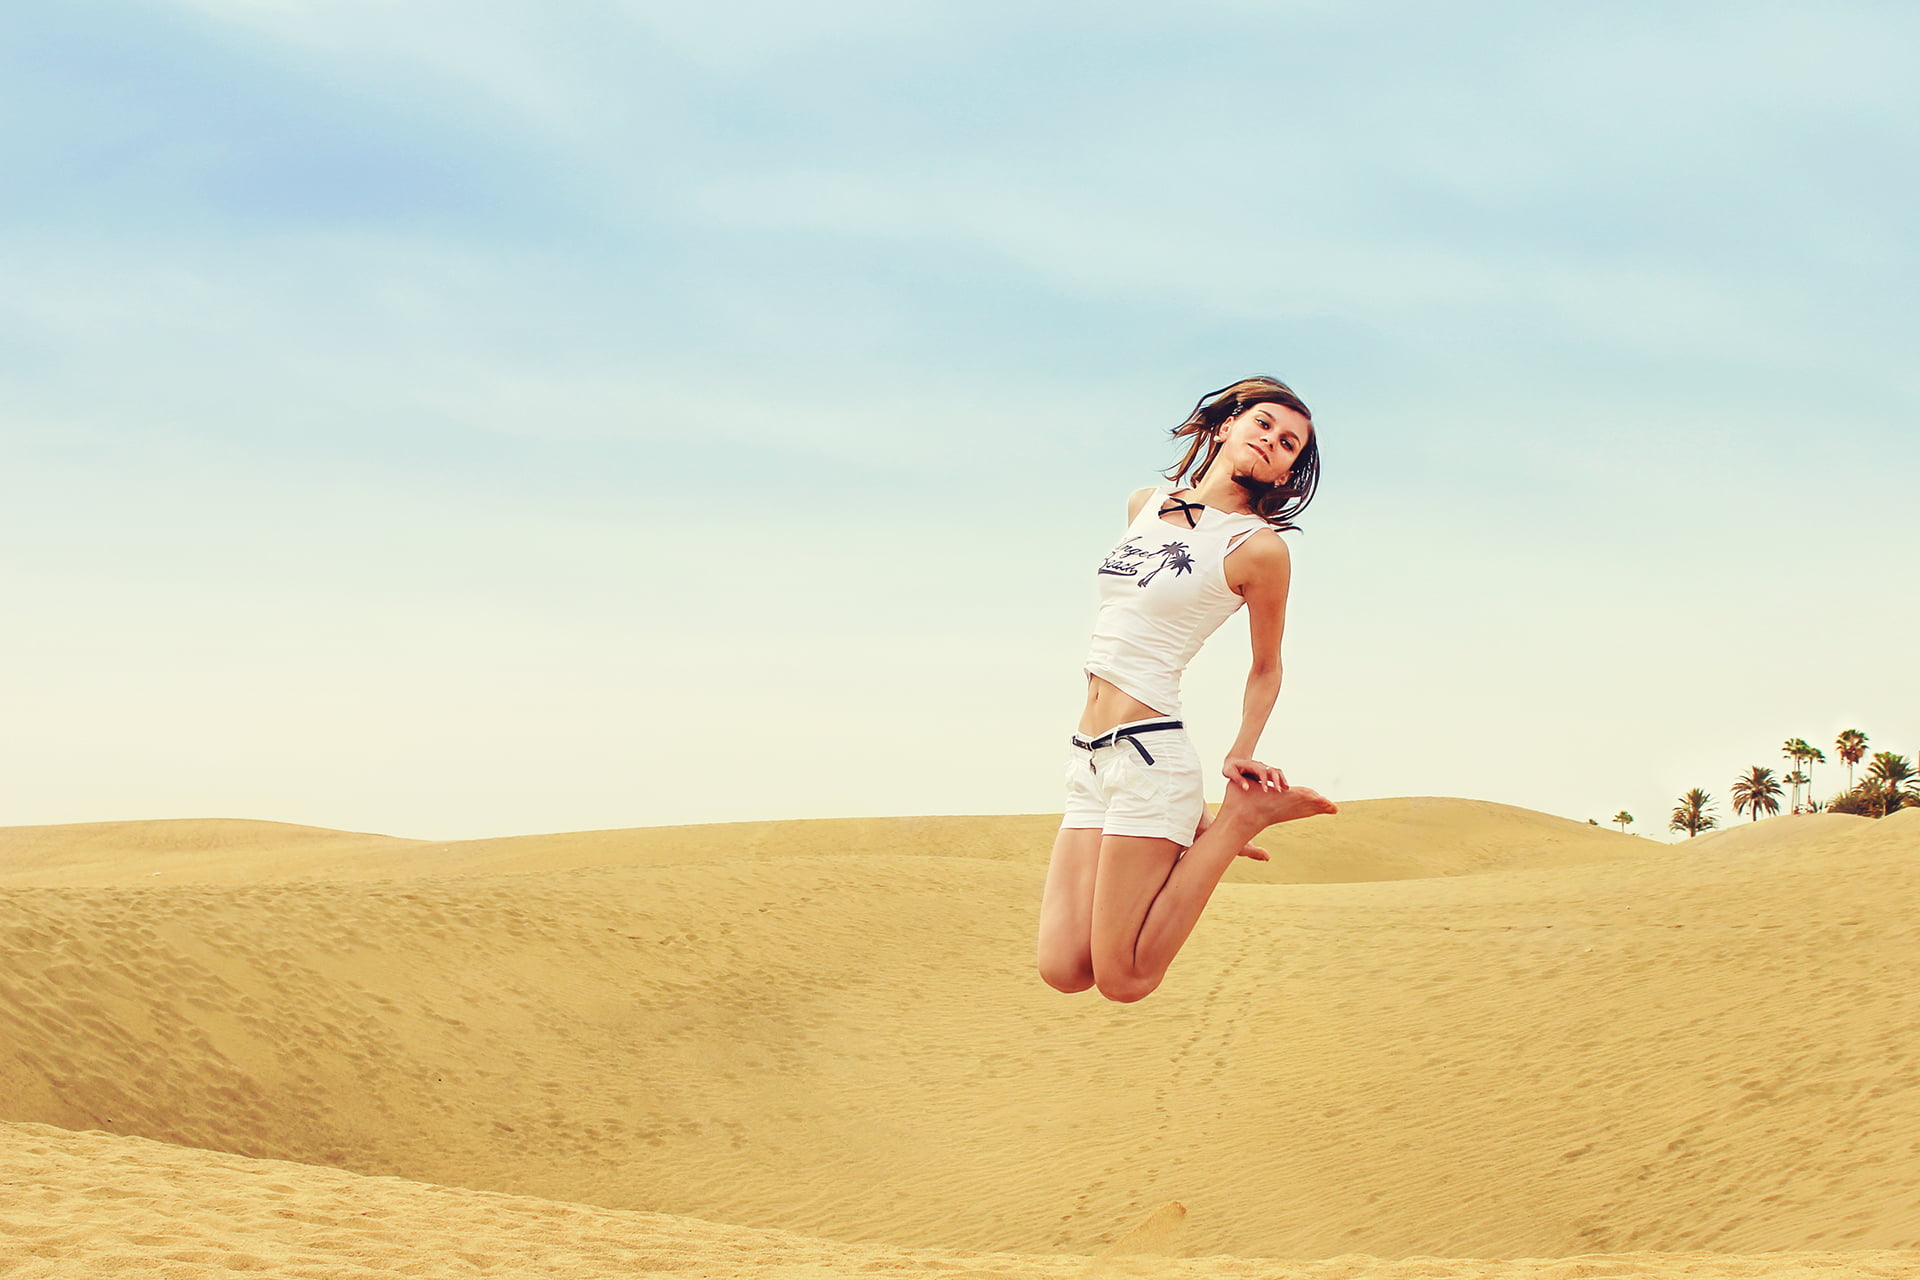 Full Length of a Woman Standing in a Desert